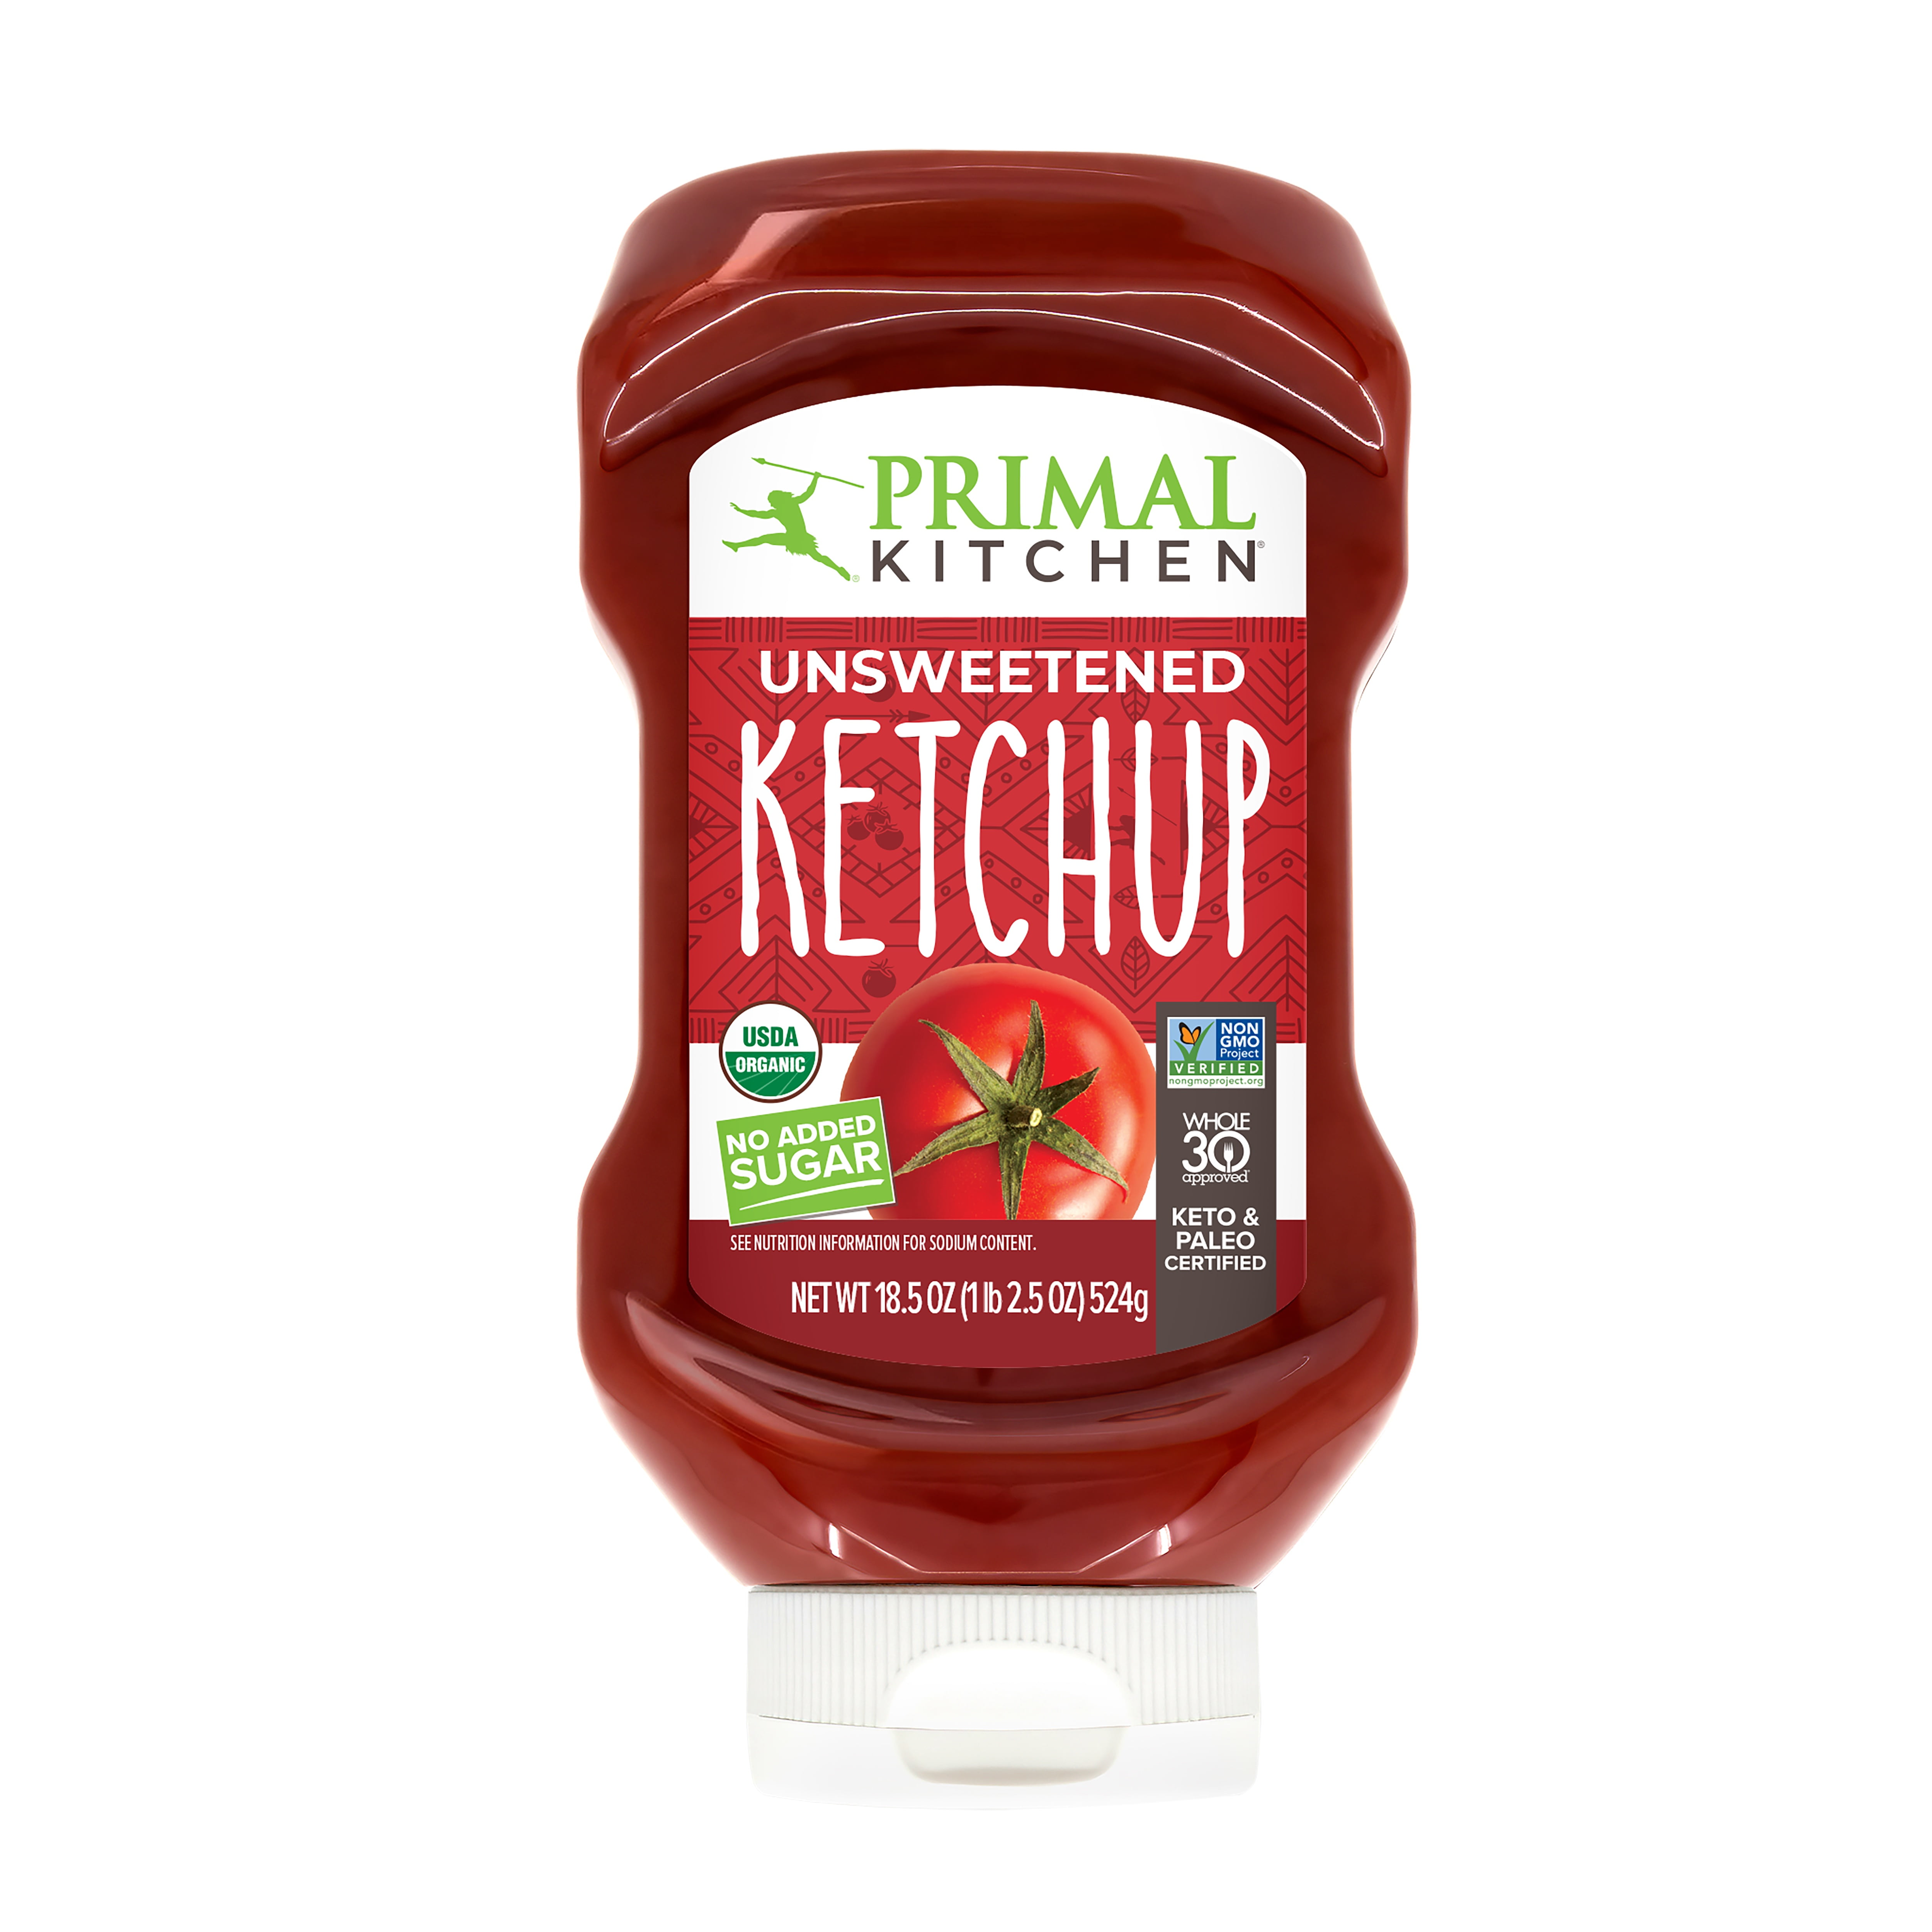 Primal Kitchen Ketchup, Unsweetened - 18.5 oz